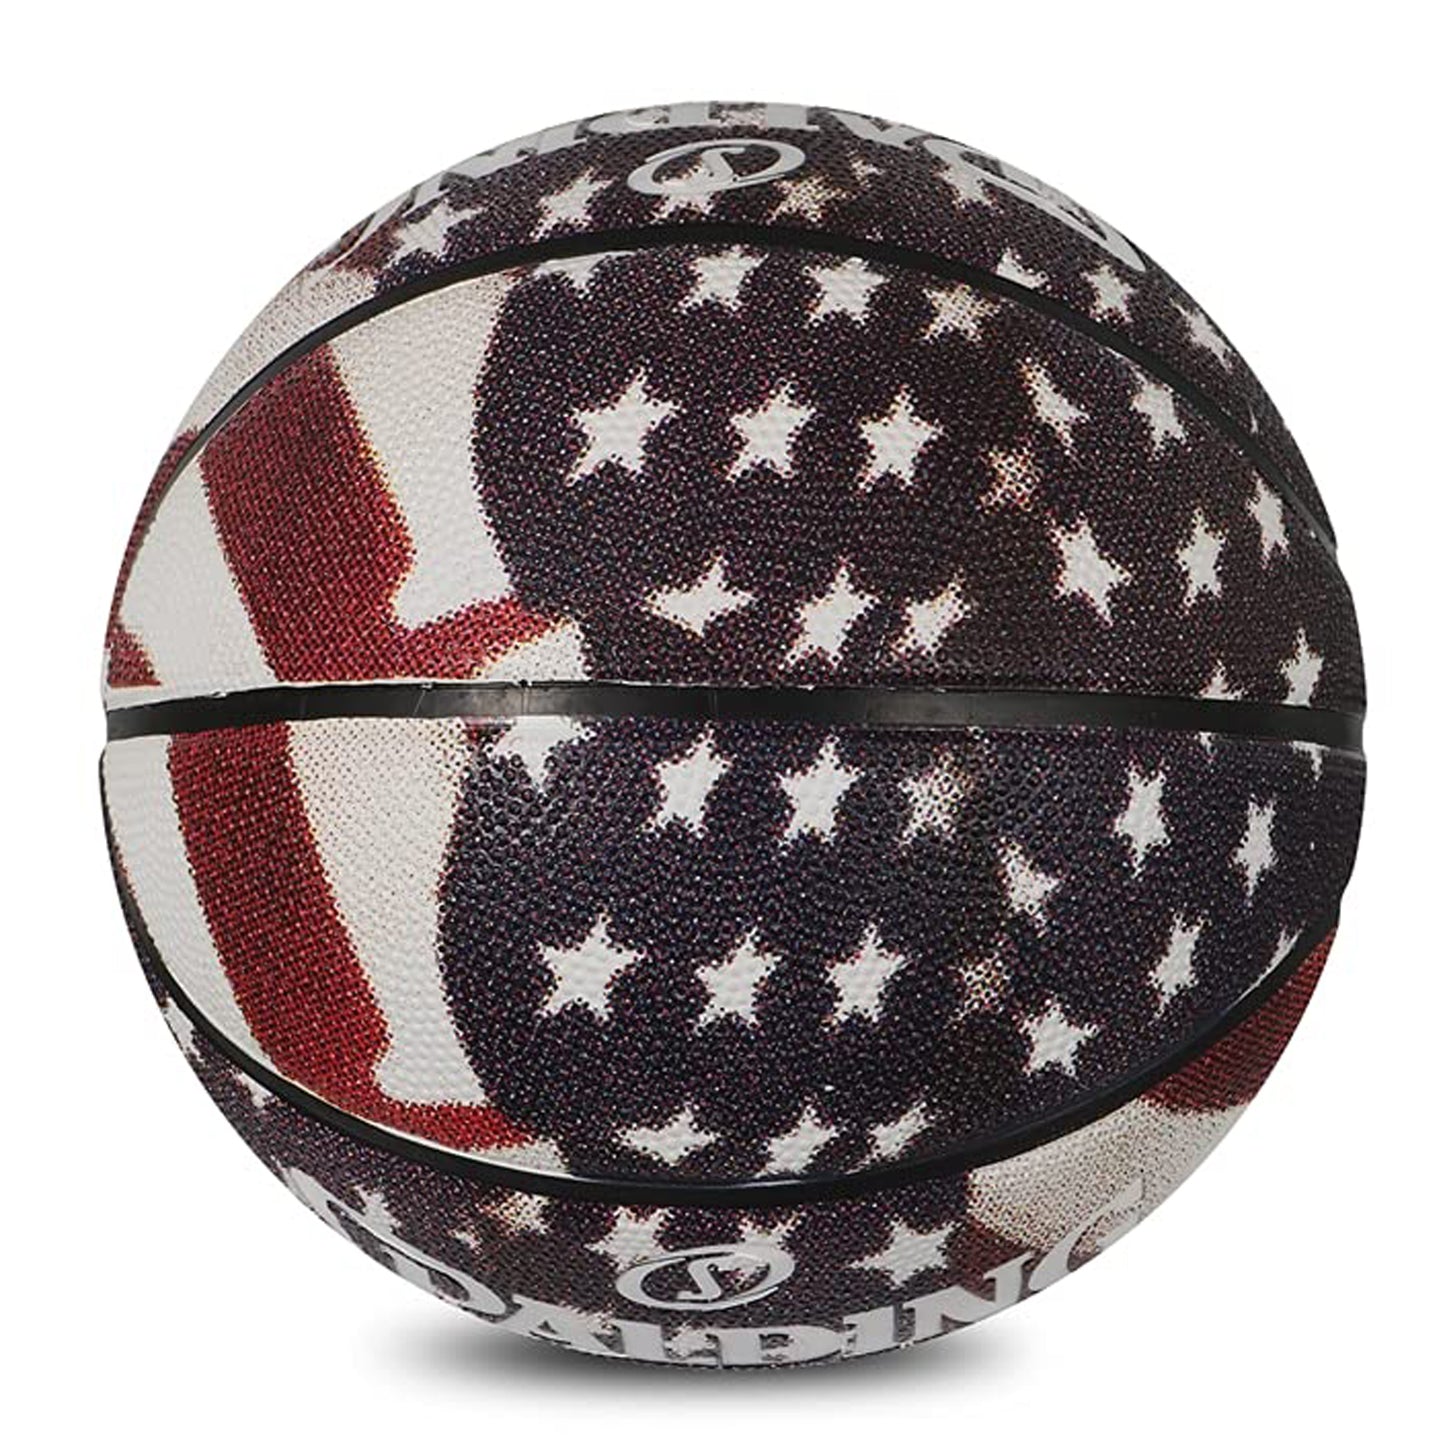 Spalding Star & Strips Basketball ,Multi color, Size 7 - Best Price online Prokicksports.com